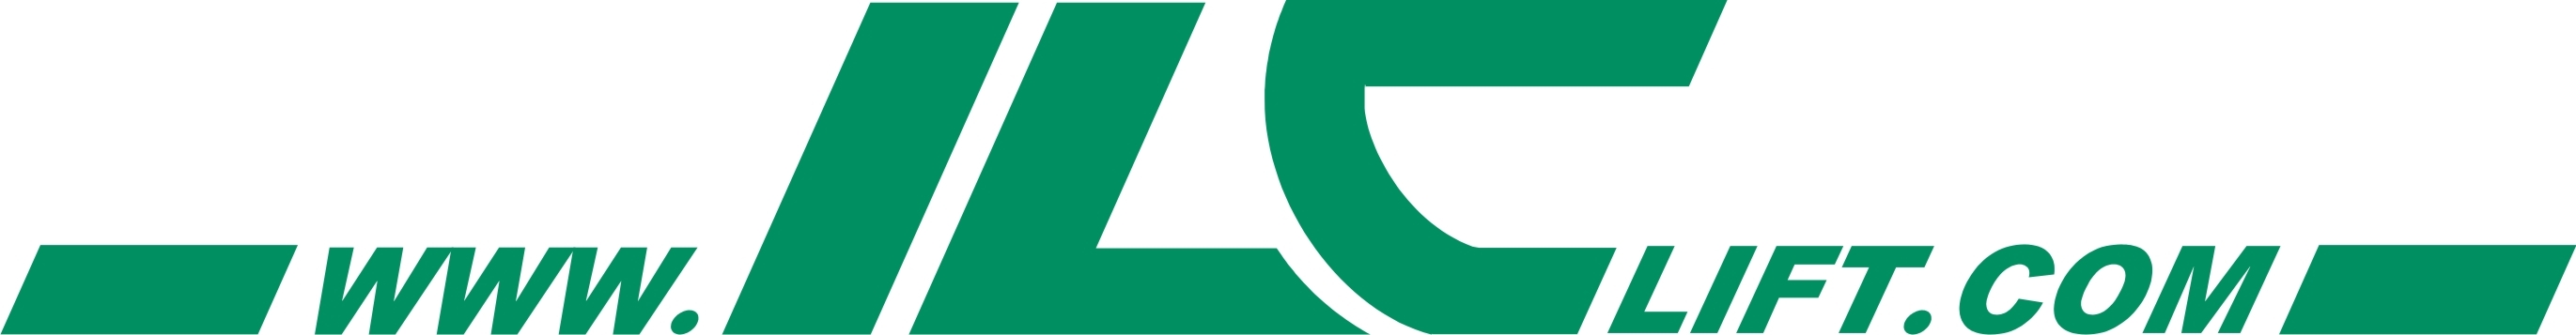 Logo ILC INTERNATIONAL LIFT COMPONENTS SRL